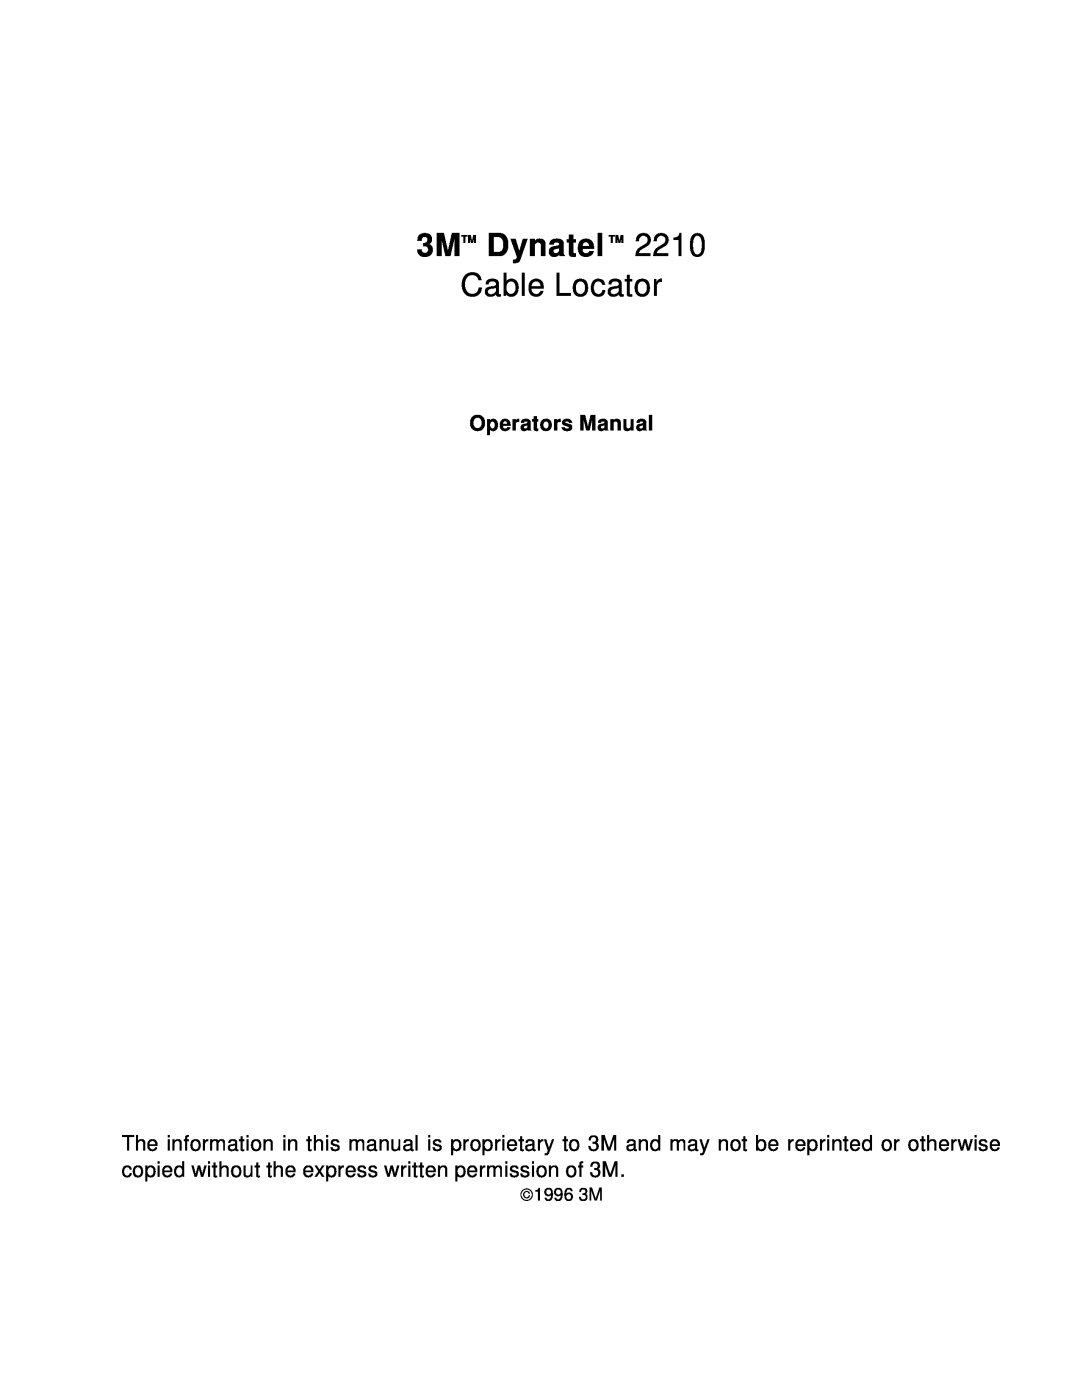 3M 2210 manual Operators Manual, 3MTM Dynatel TM, Cable Locator 